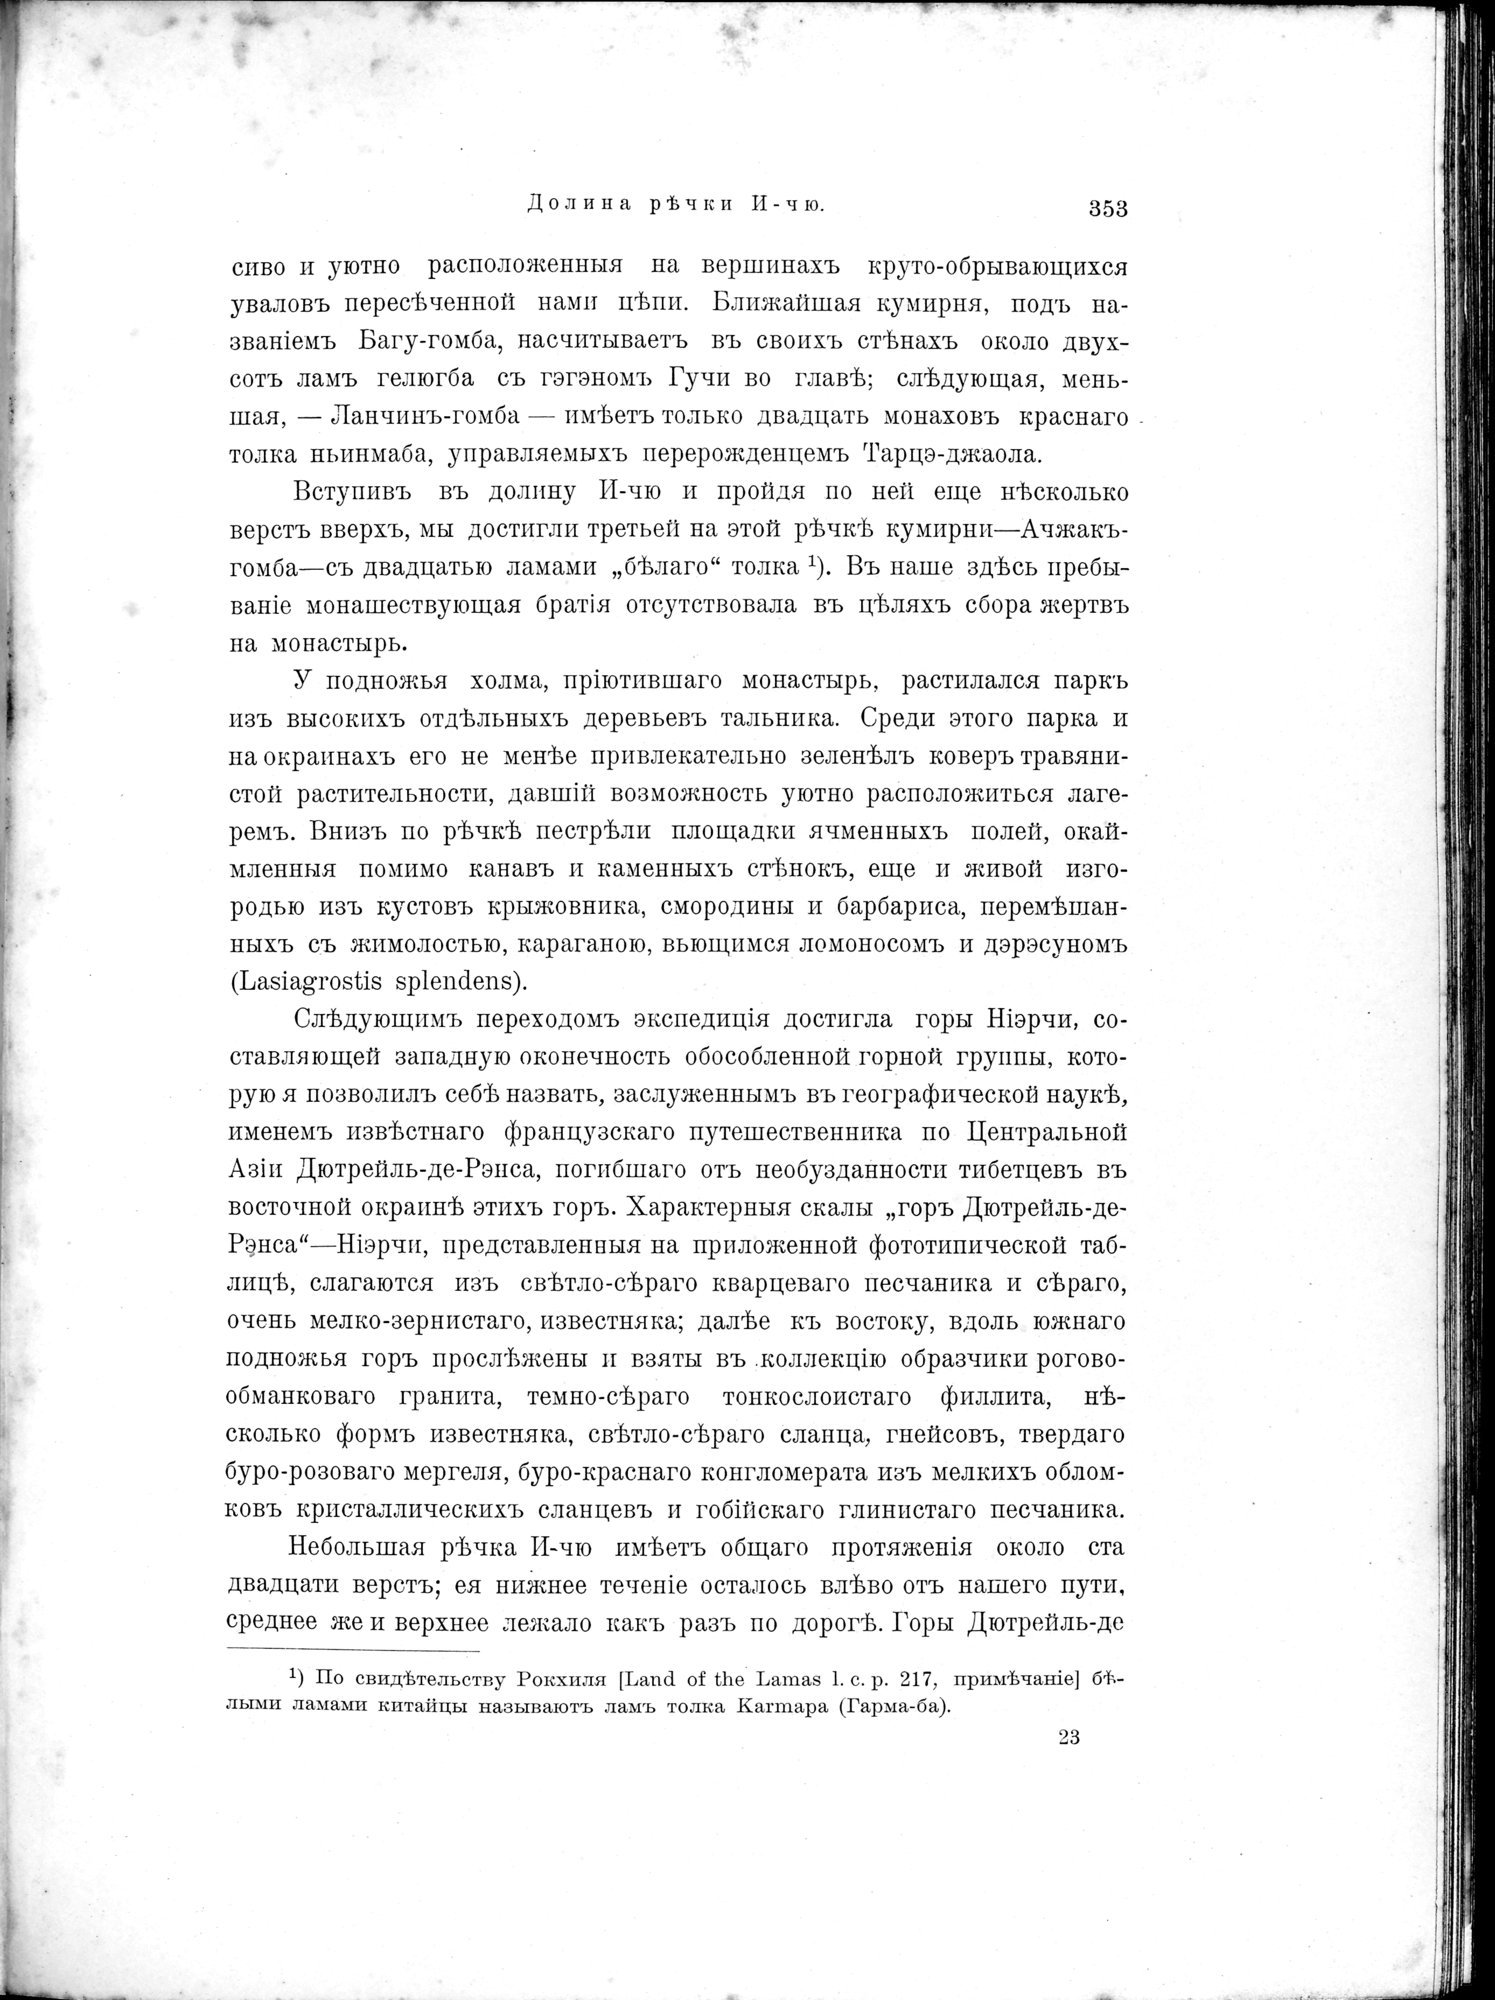 Mongoliia i Kam : vol.2 / Page 133 (Grayscale High Resolution Image)